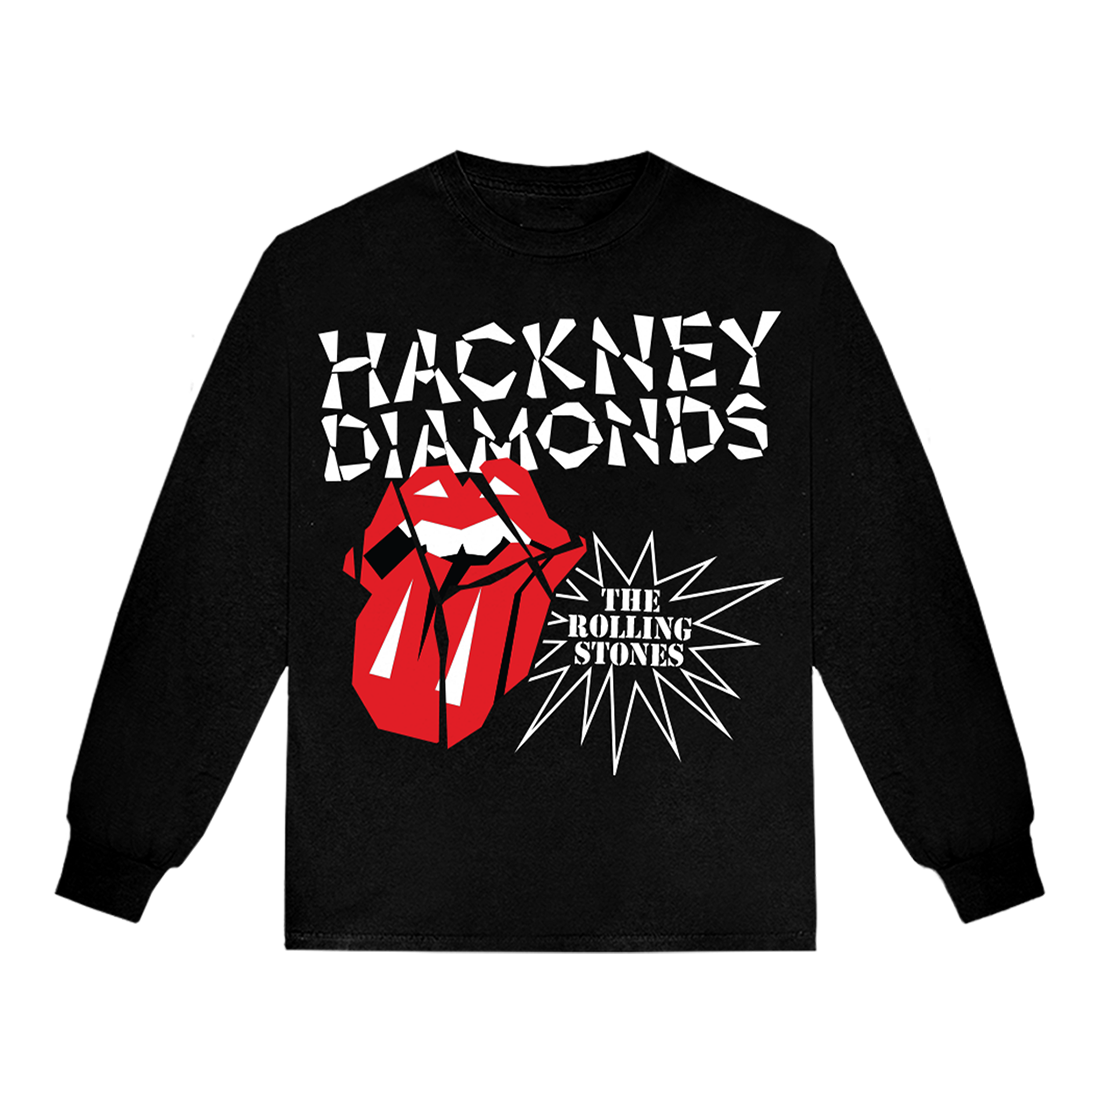 The Rolling Stones - Hackney Diamonds Burst Long Sleeve Shirt